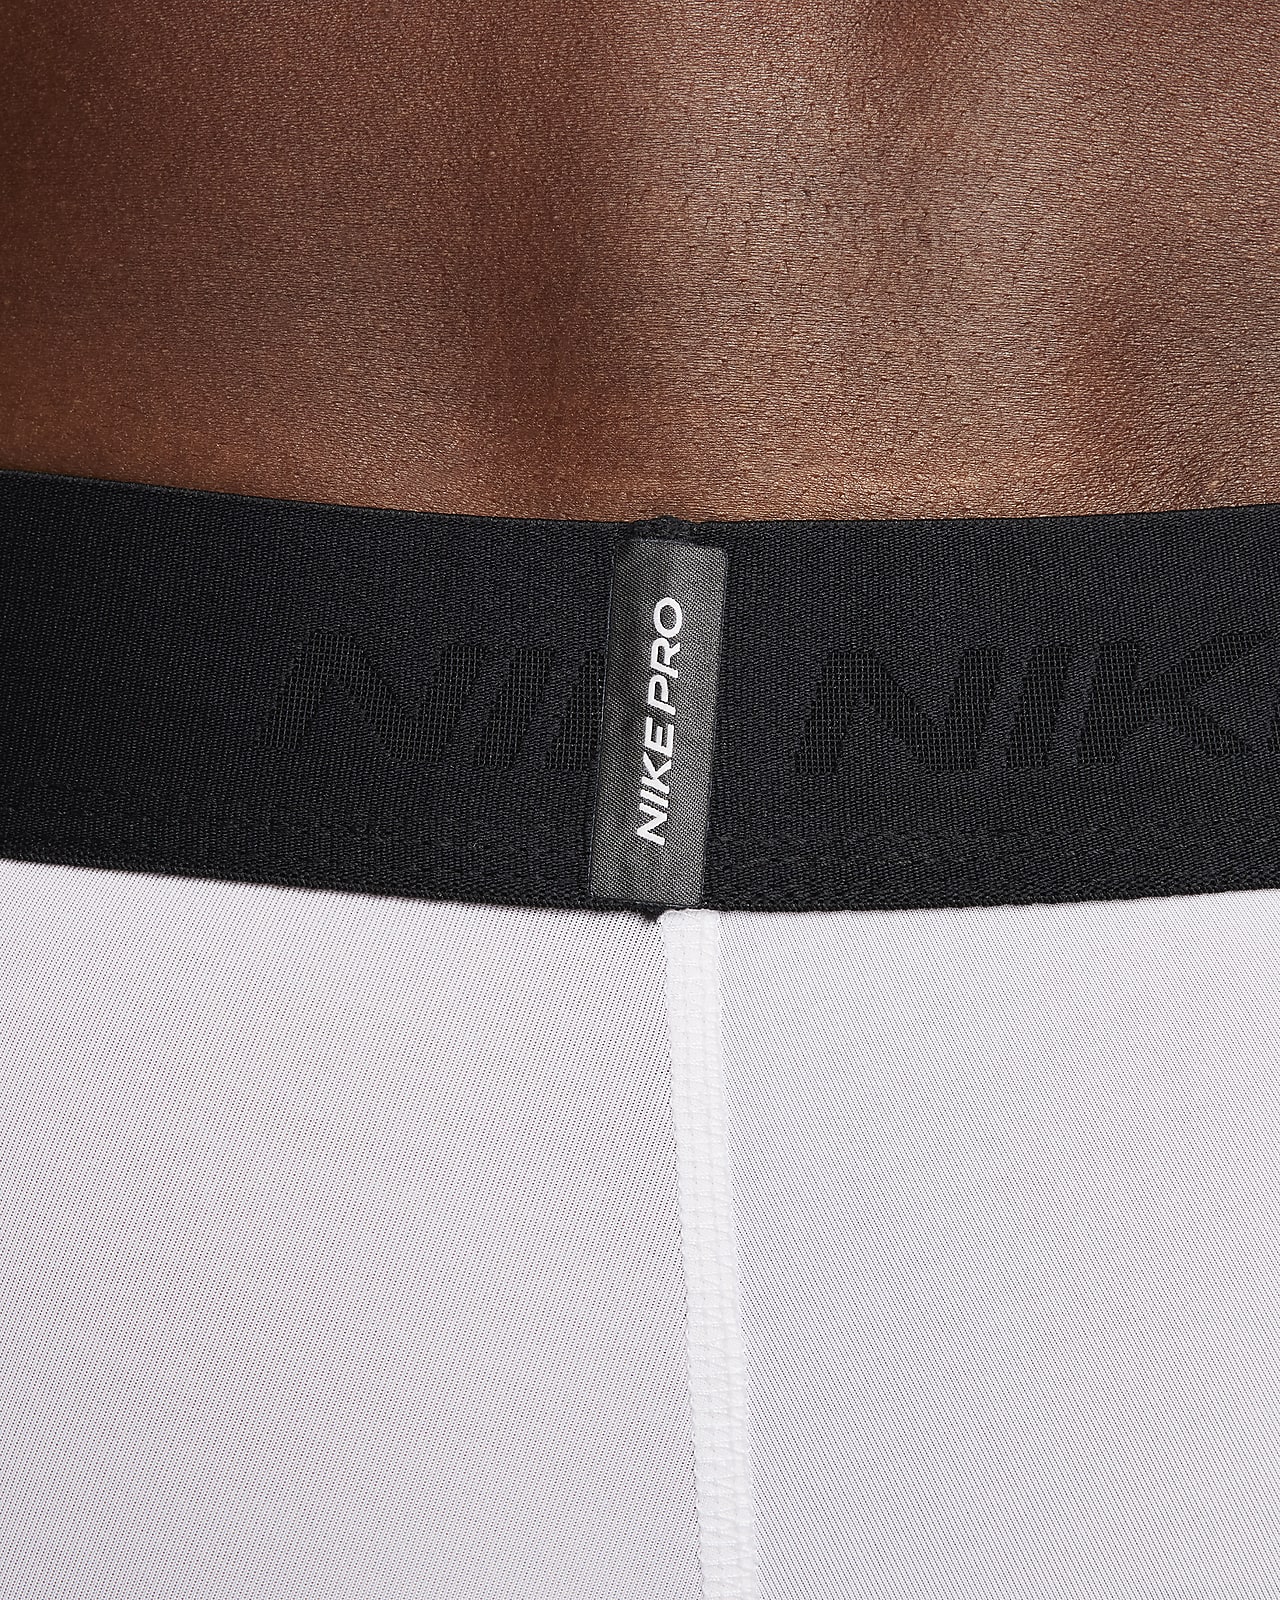 Nike Pro Warm Static Tight Womens Small Gray Dri Fit Athletic